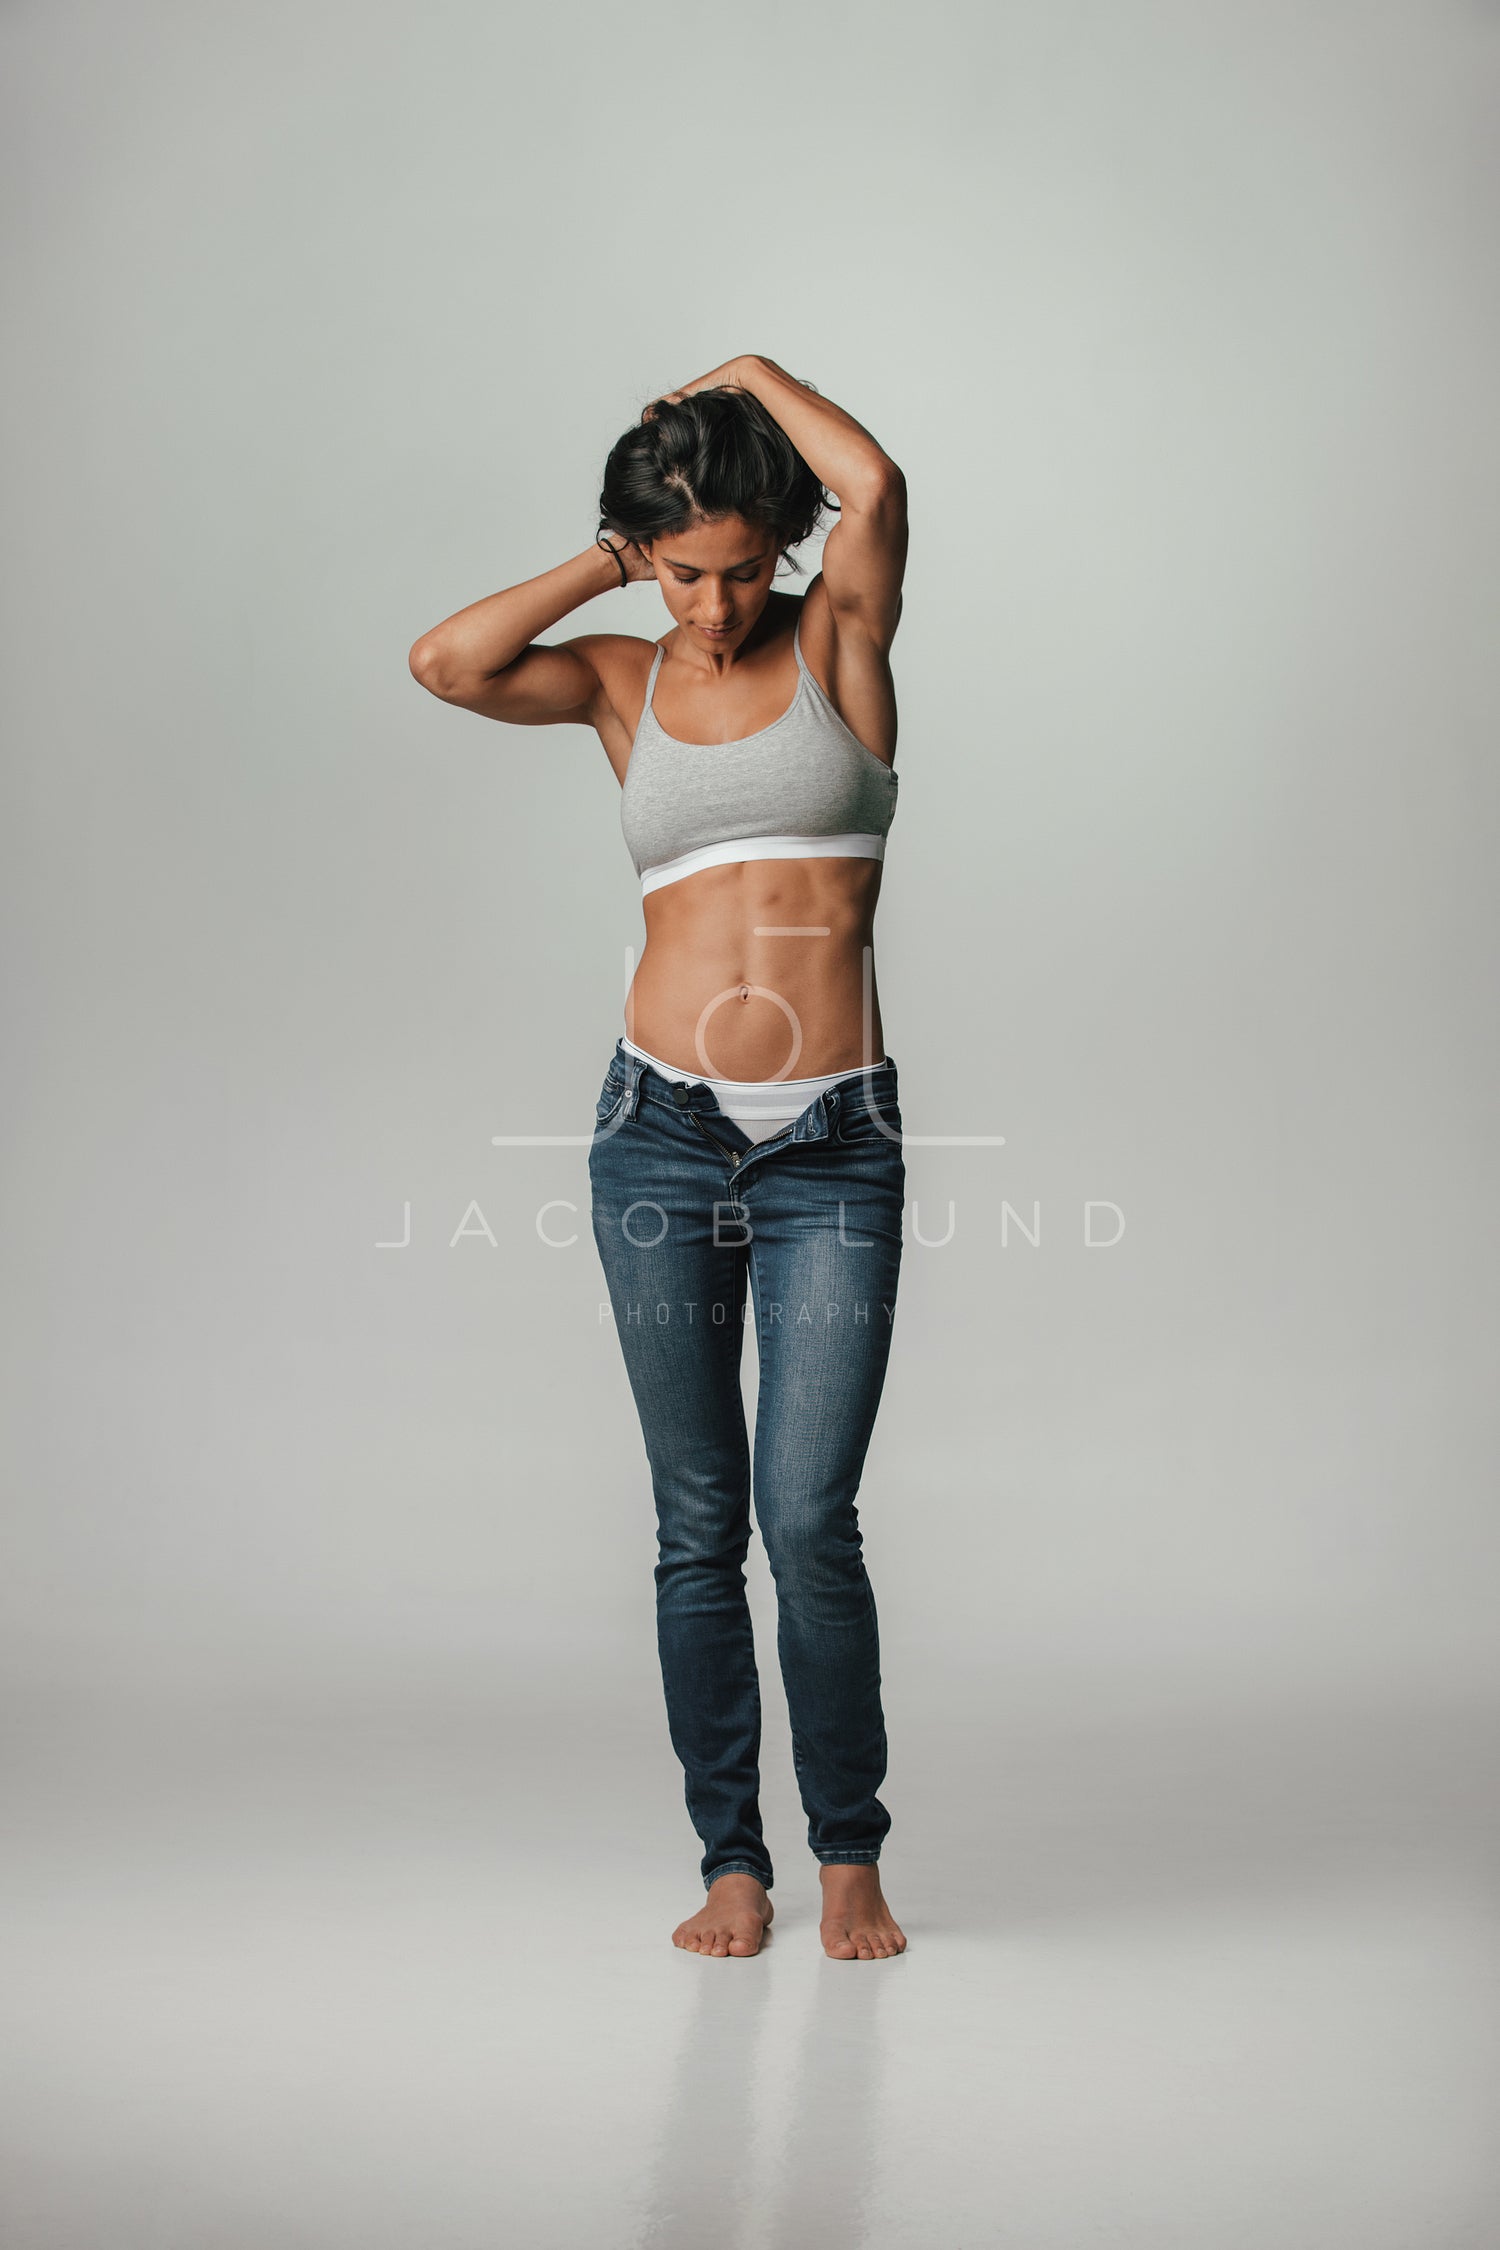 Poses for Girls in Jeans | TikTok